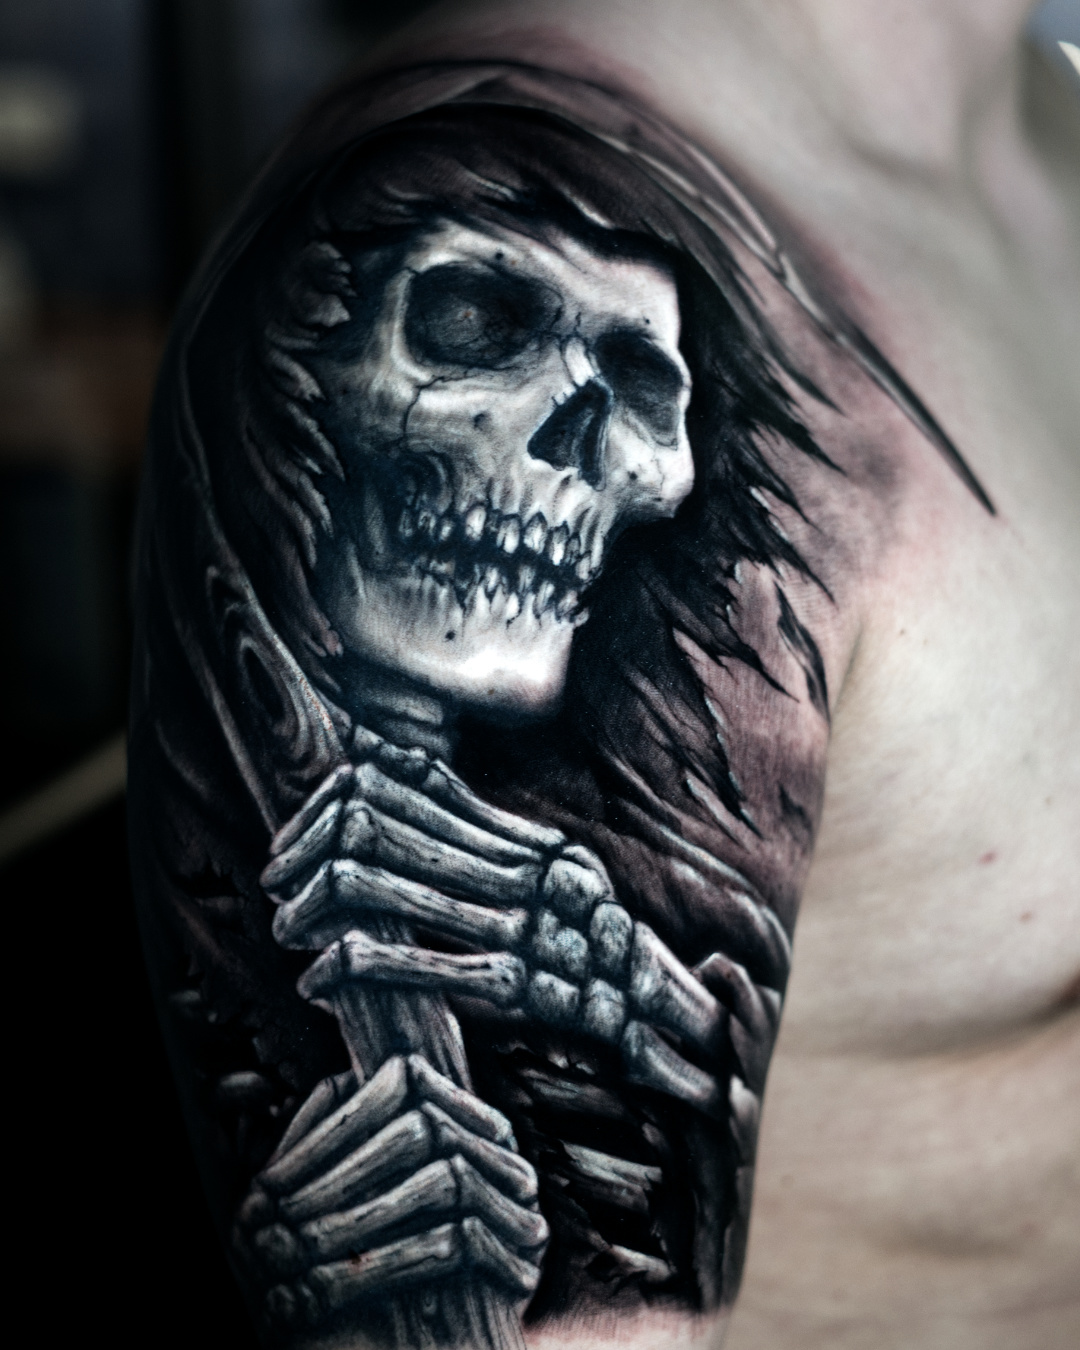 Tattoo tatuaje Alexis Epalza black and grey realistic la muerte death skull reaper